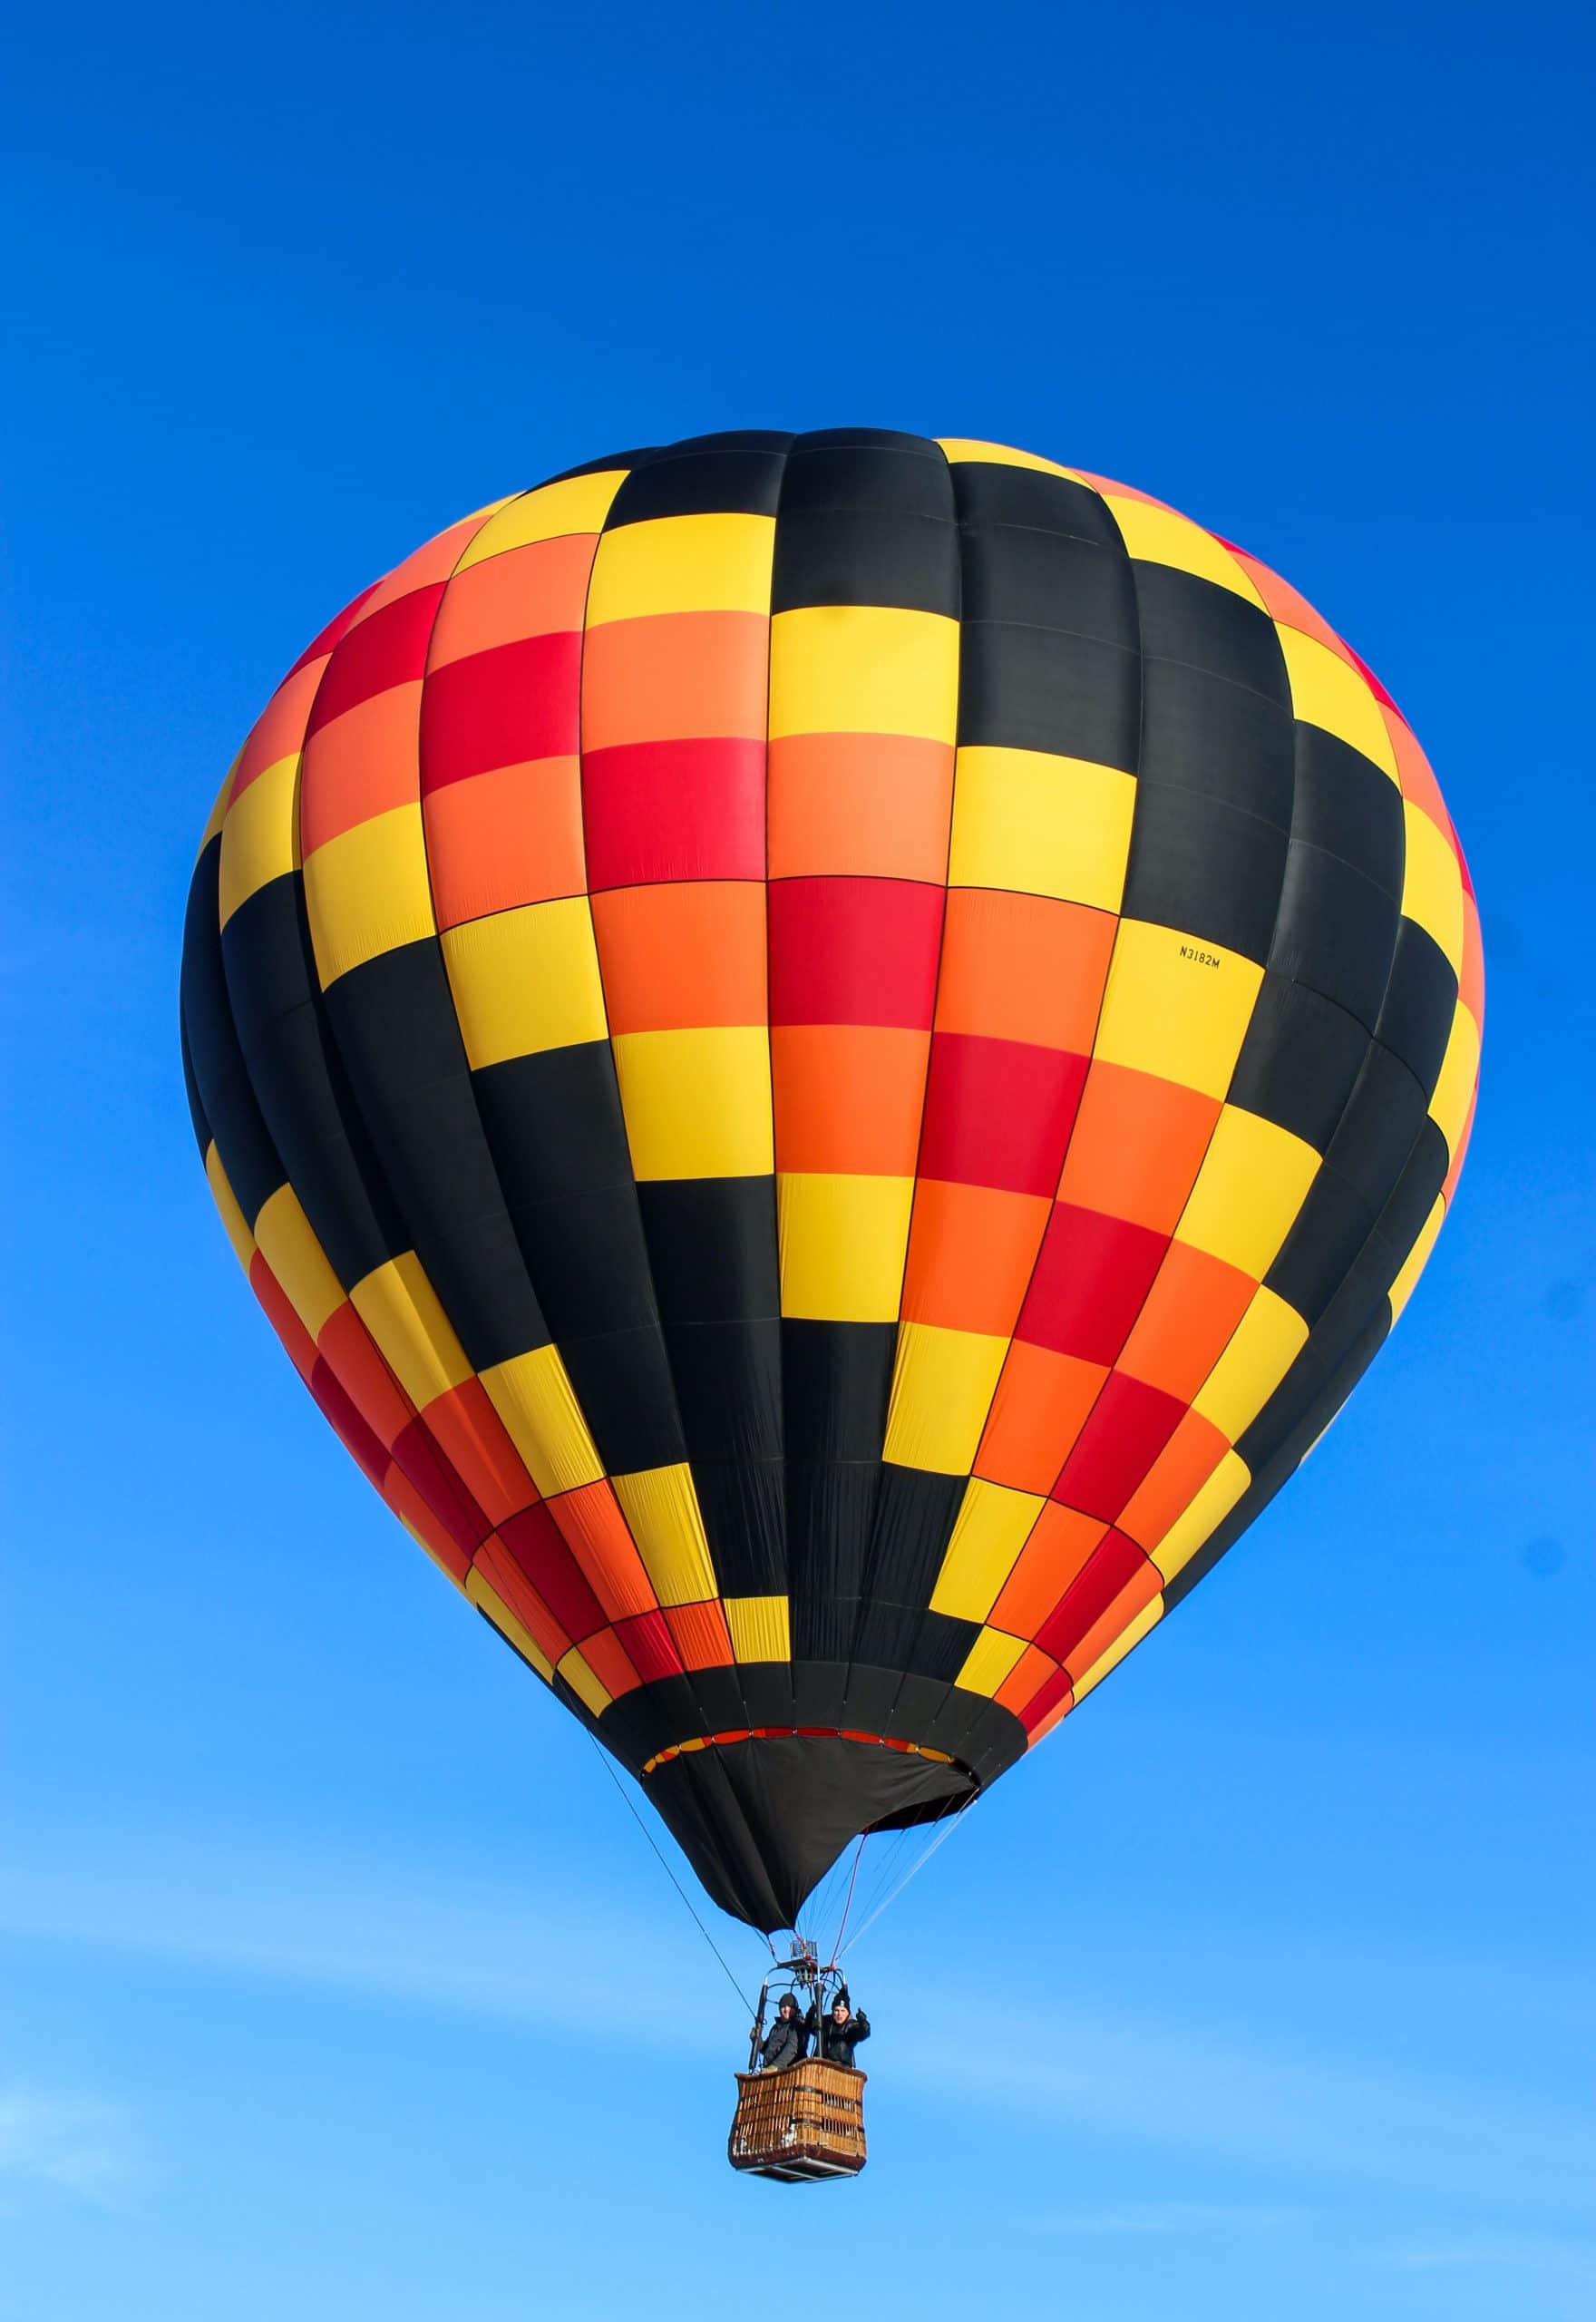 a hot air balloon in flight